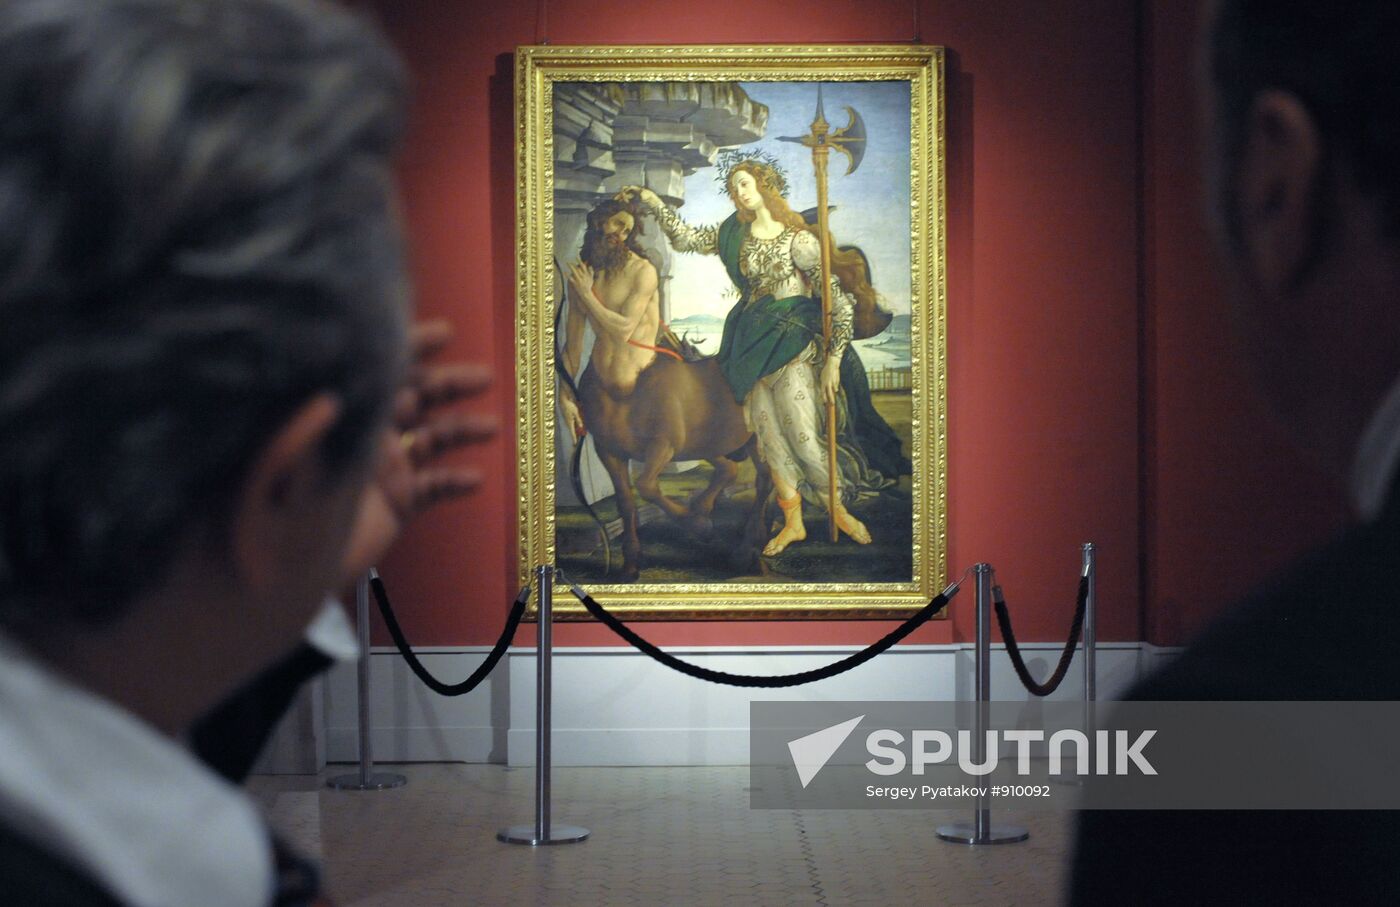 Sandro Botticelli's "Pallas and Centaur" painting presented